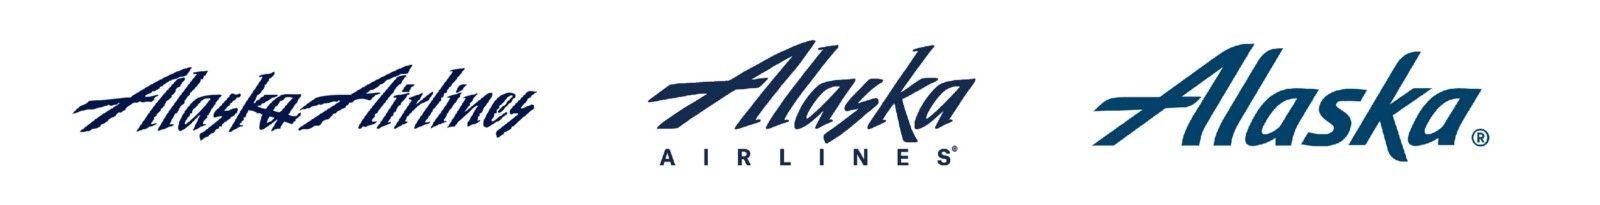 Alaska Airlines Old Logo - A Closer Look at the 2016 Alaska Airlines Rebrand